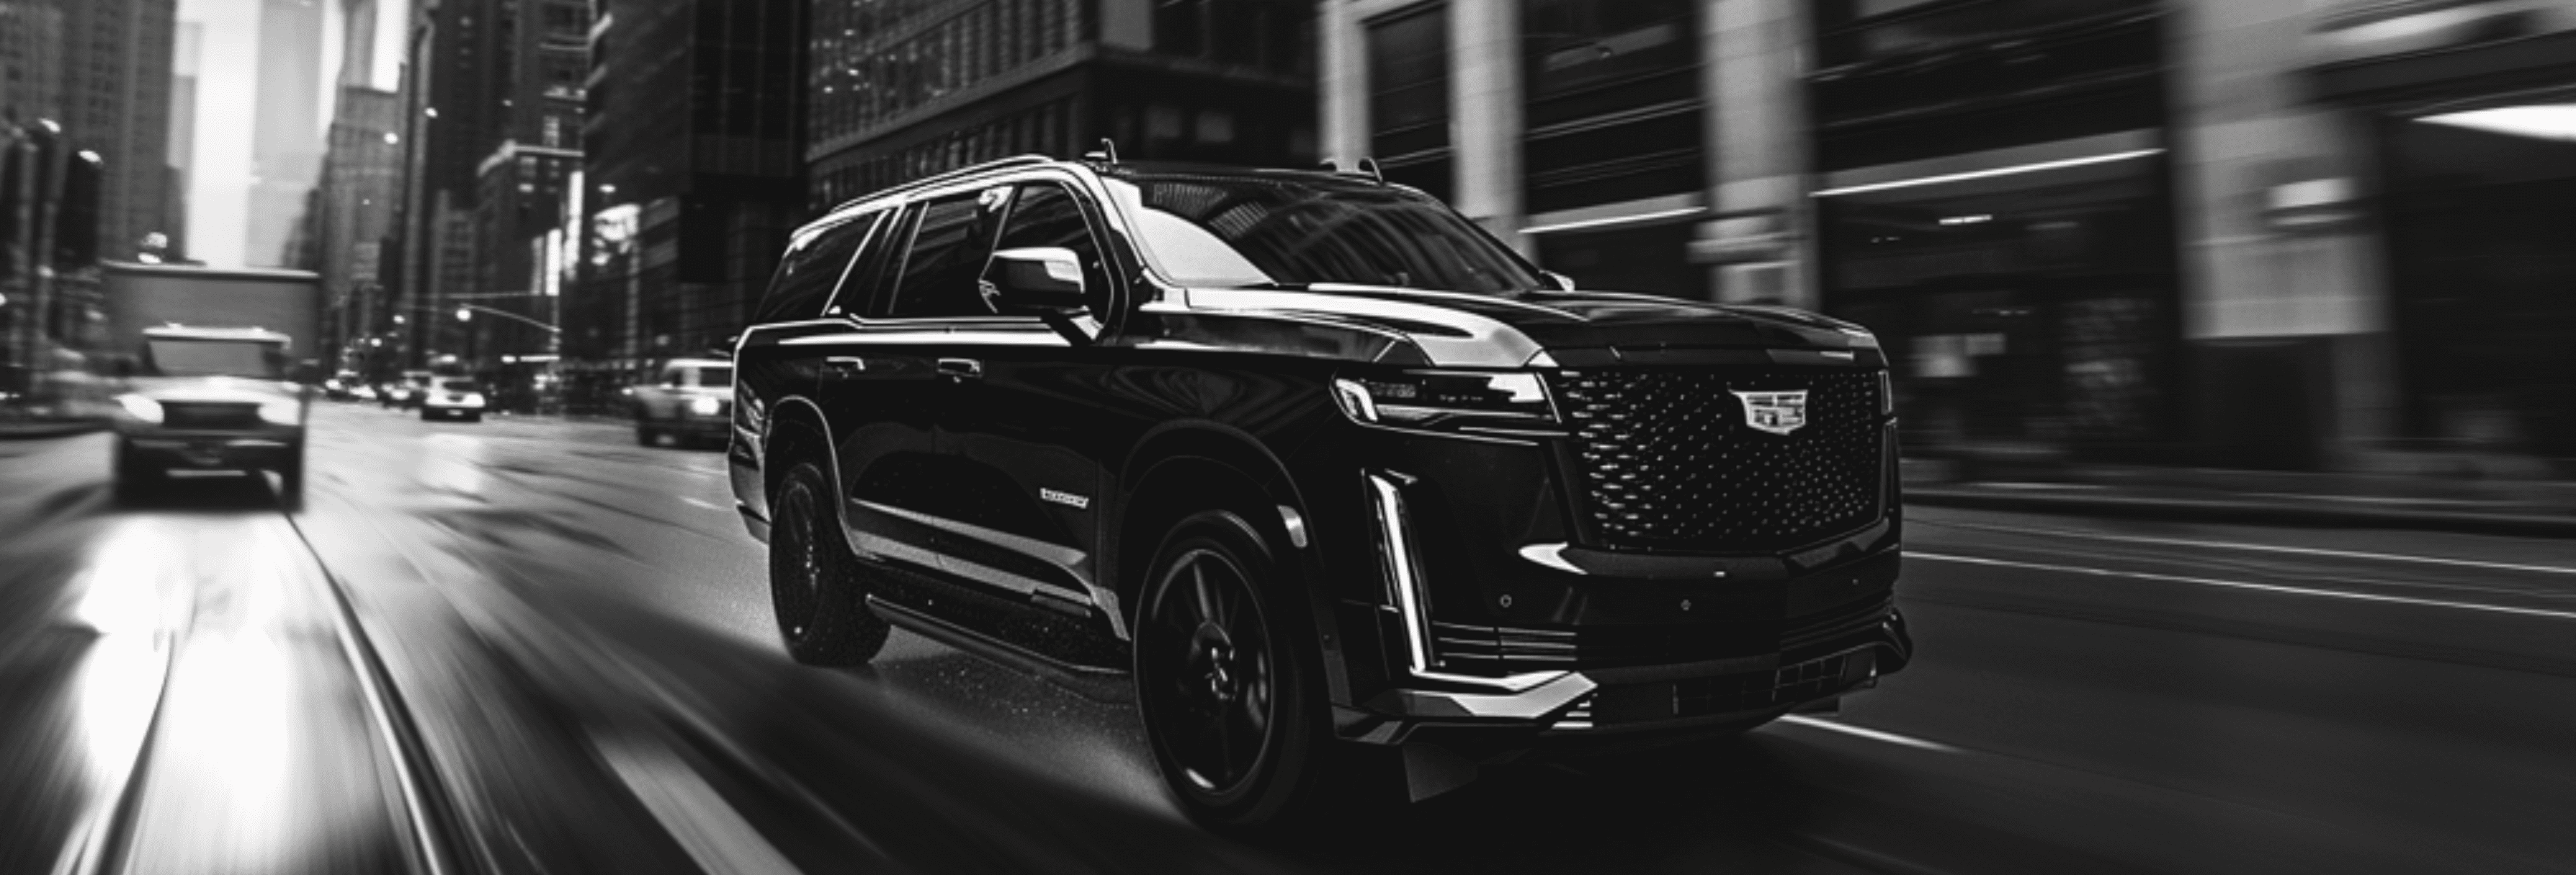 Luxury Escalade SUV in NYC